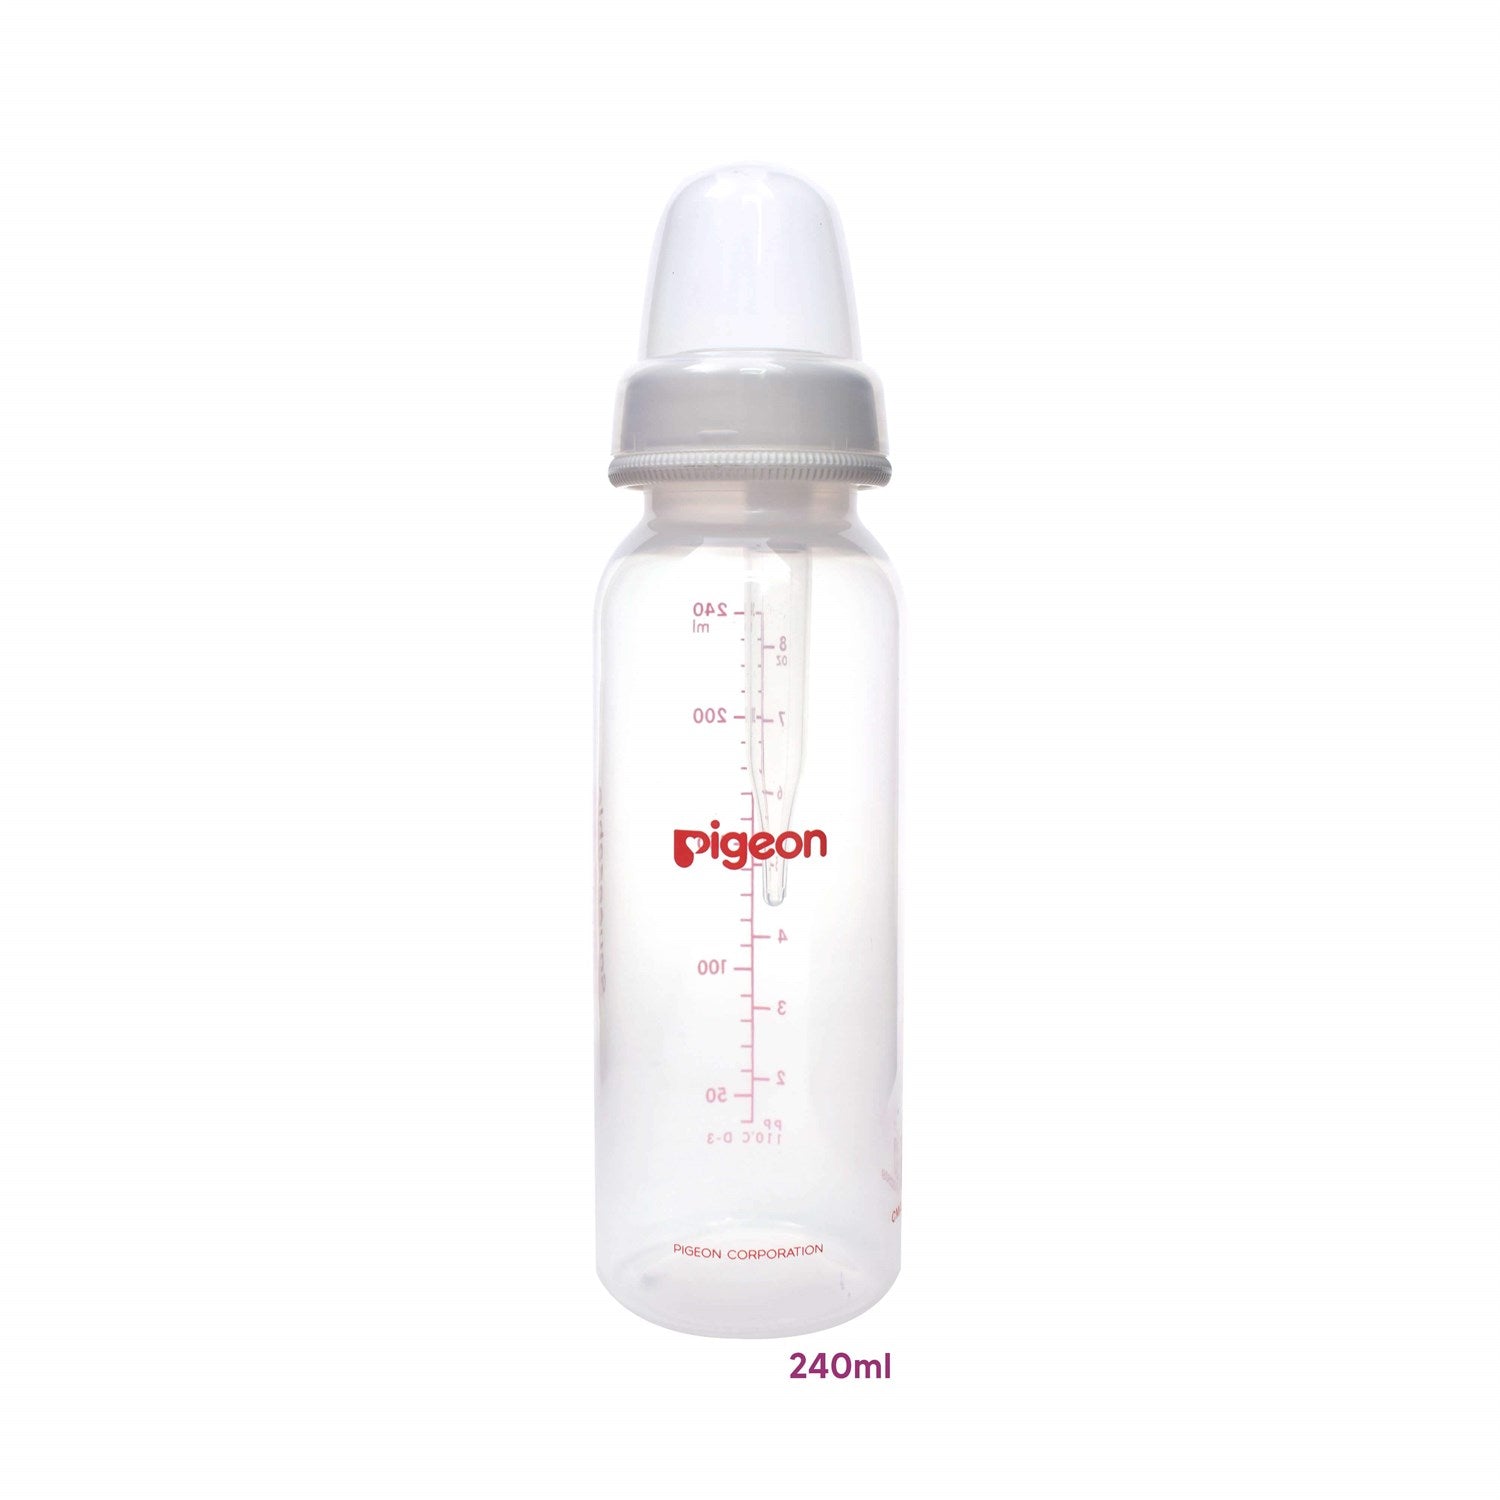 PIGEON Cleft Palate Feeding Bottle Round Base Adjustable Milk Flow - 2